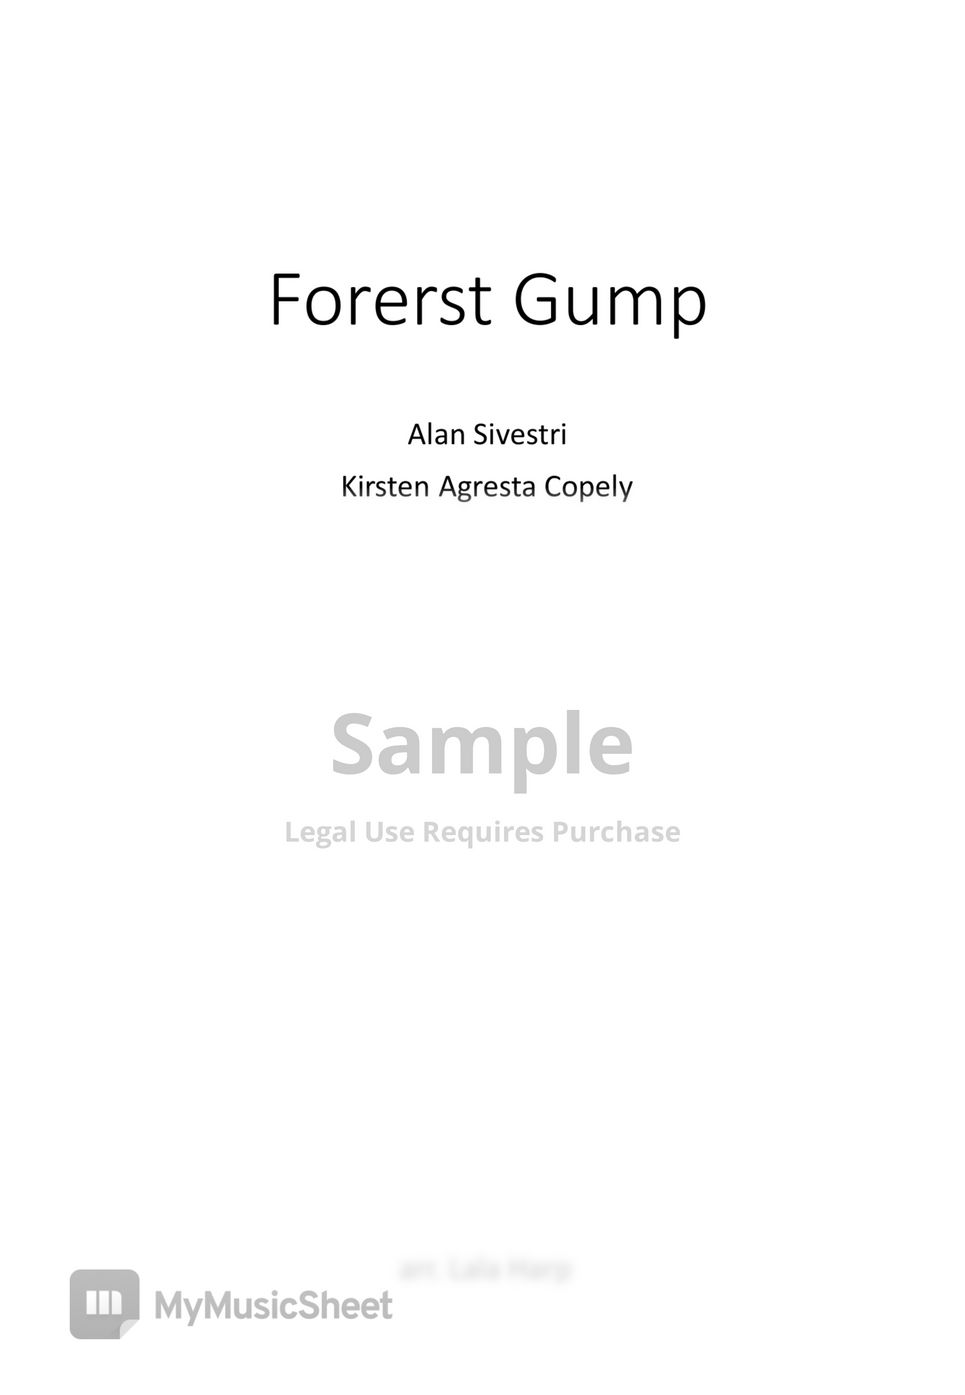 Alan Silvestri - Forrest Gump (Lap Harp) by Lala Harp